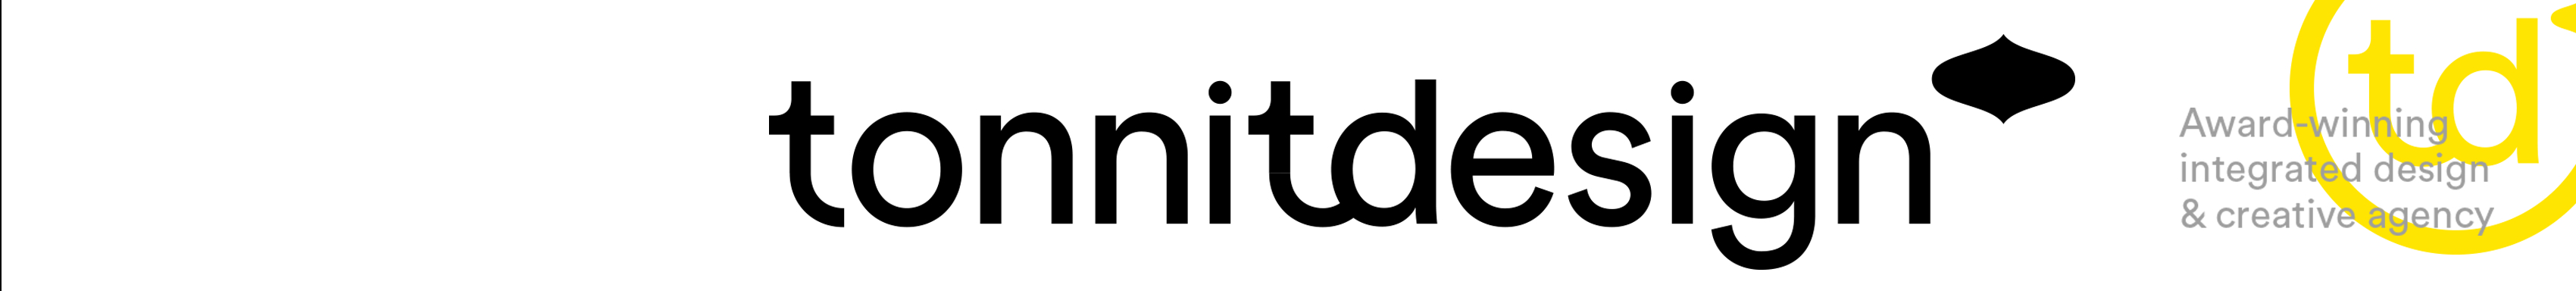 Tonnit Design's profile banner